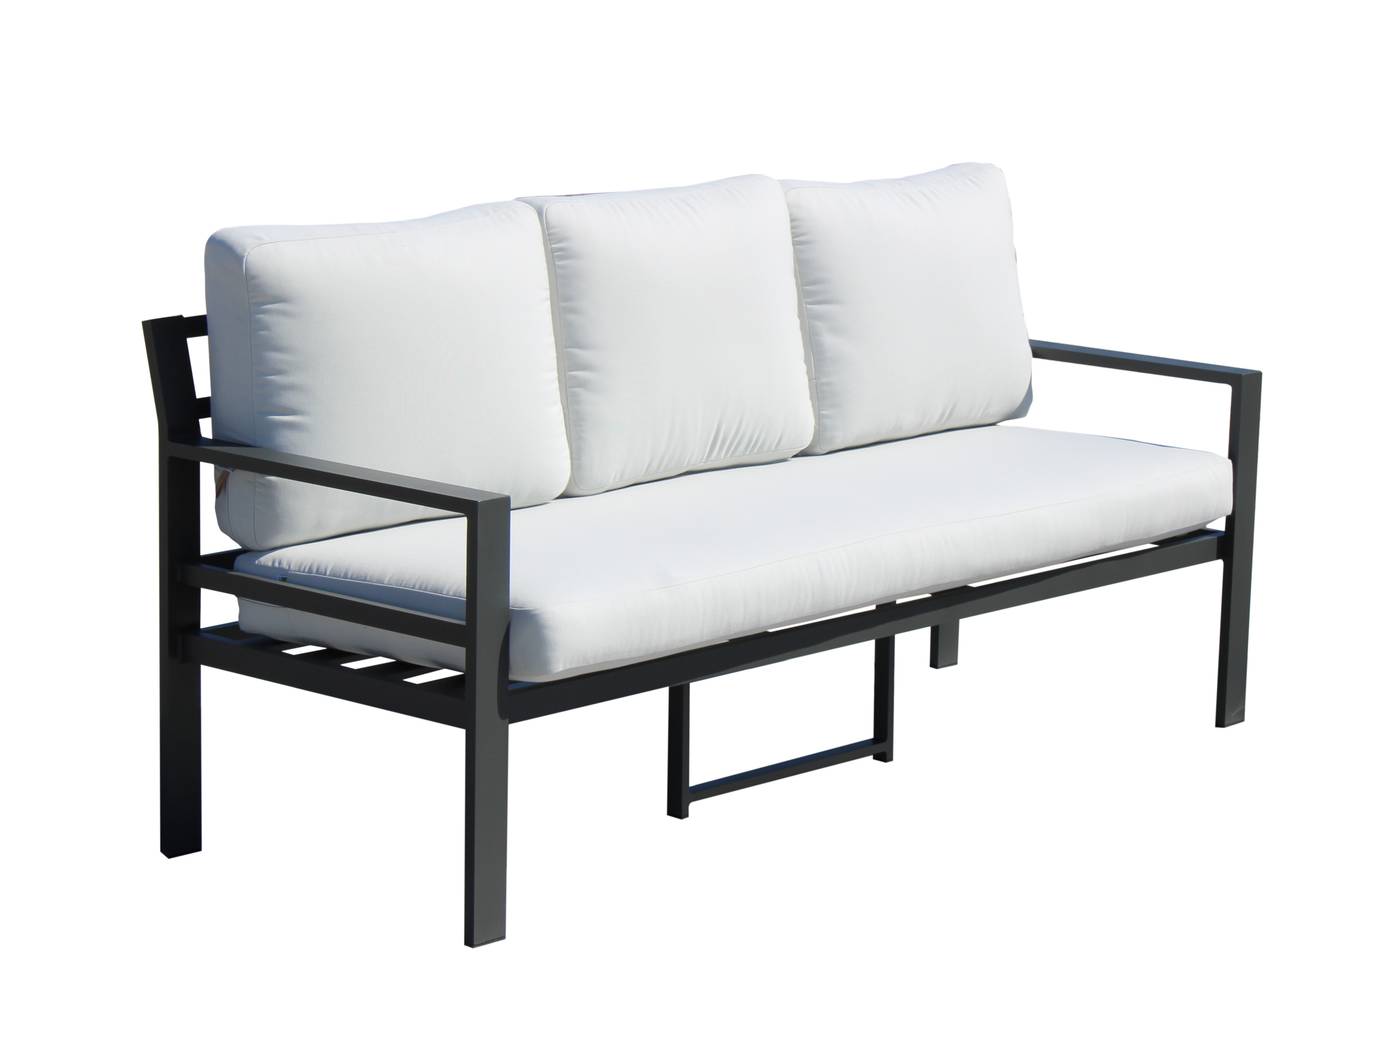 Set Aluminio Luxe Glembor-10 - Conjunto aluminio: 1 sofá 3 plazas + 2 sillones + 1 mesa de centro + 2 reposapiés. Disponible en color blanco, antracita, champagne, plata o marrón.